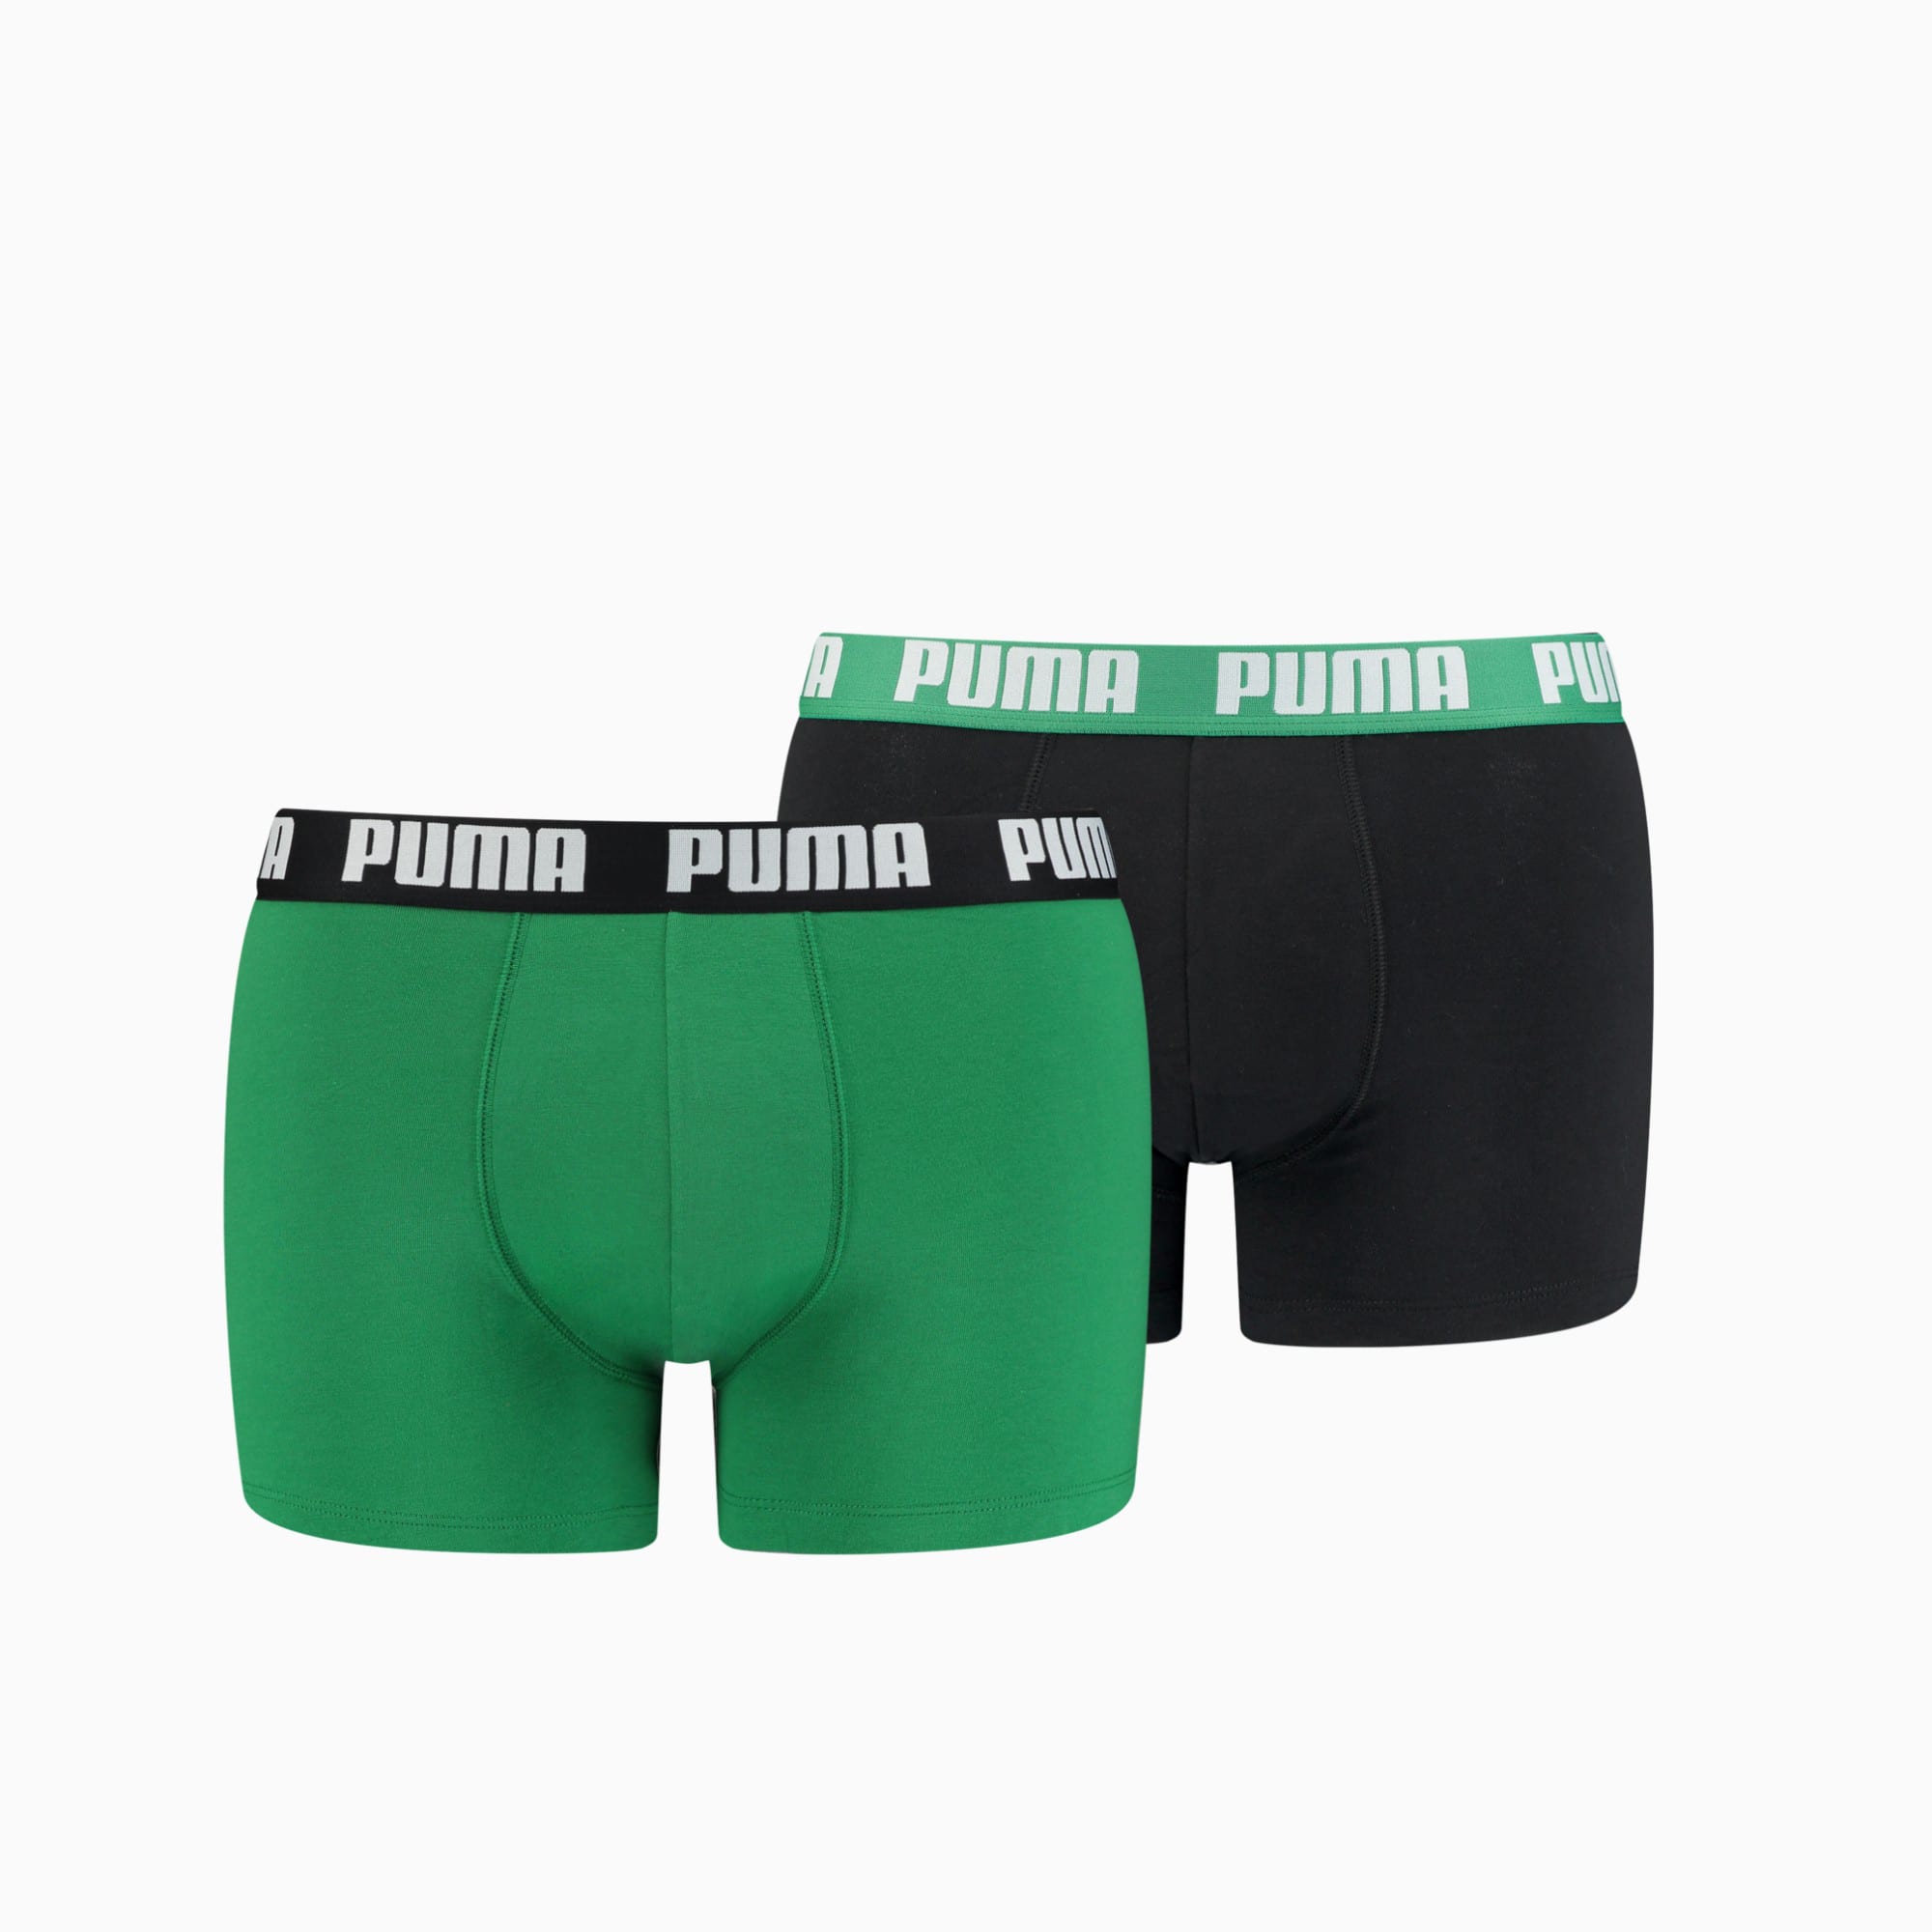 PUMA Basic boxers set van 2, Groen/Aucun, Maat L